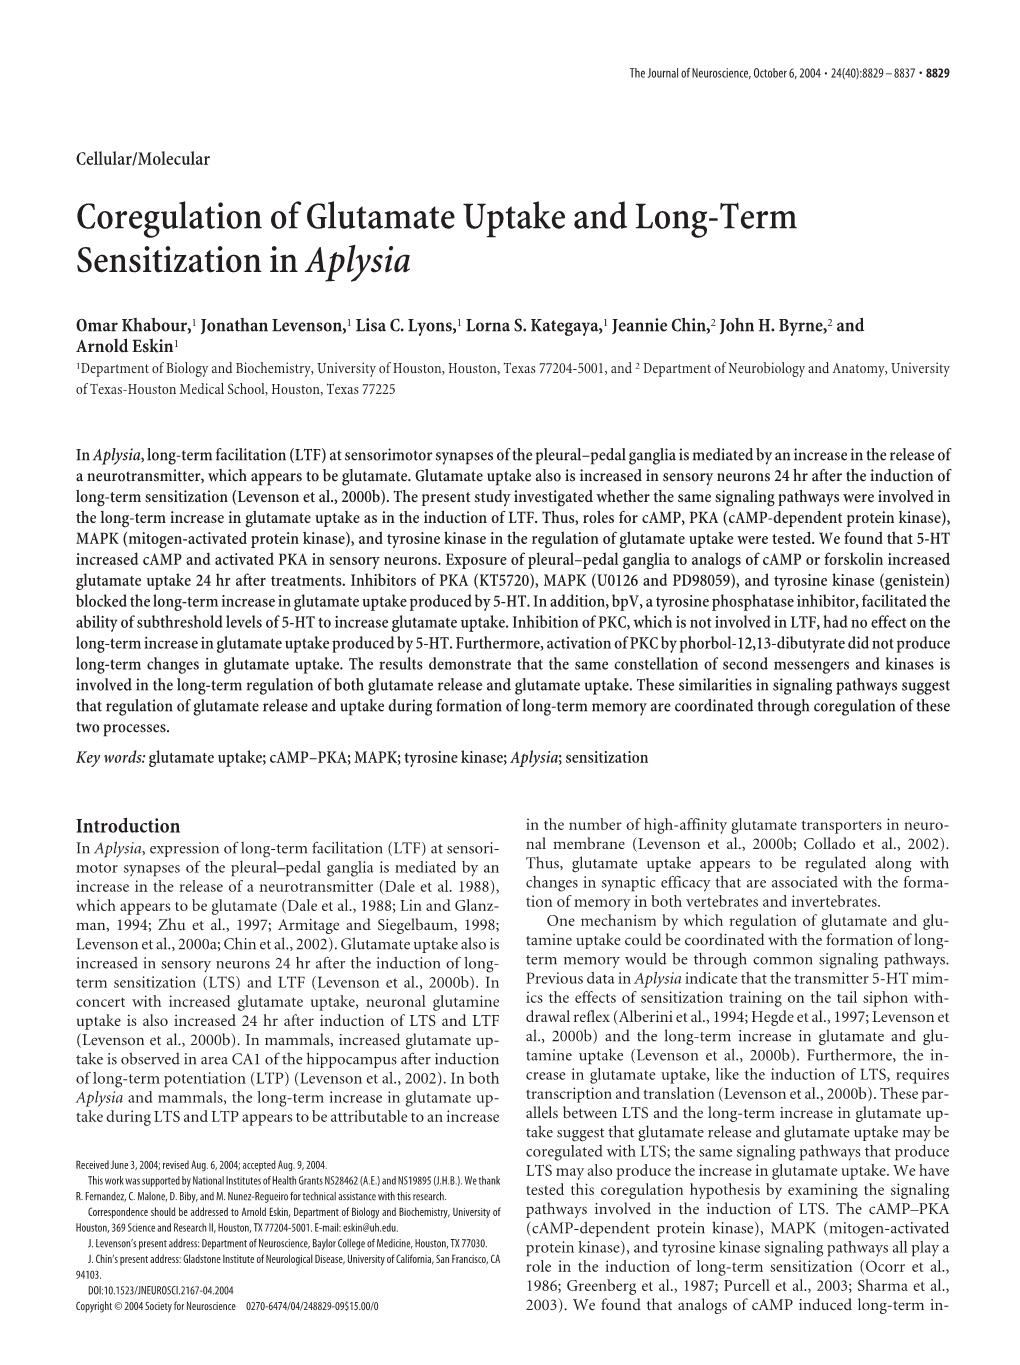 Coregulation of Glutamate Uptake and Long-Term Sensitization Inaplysia